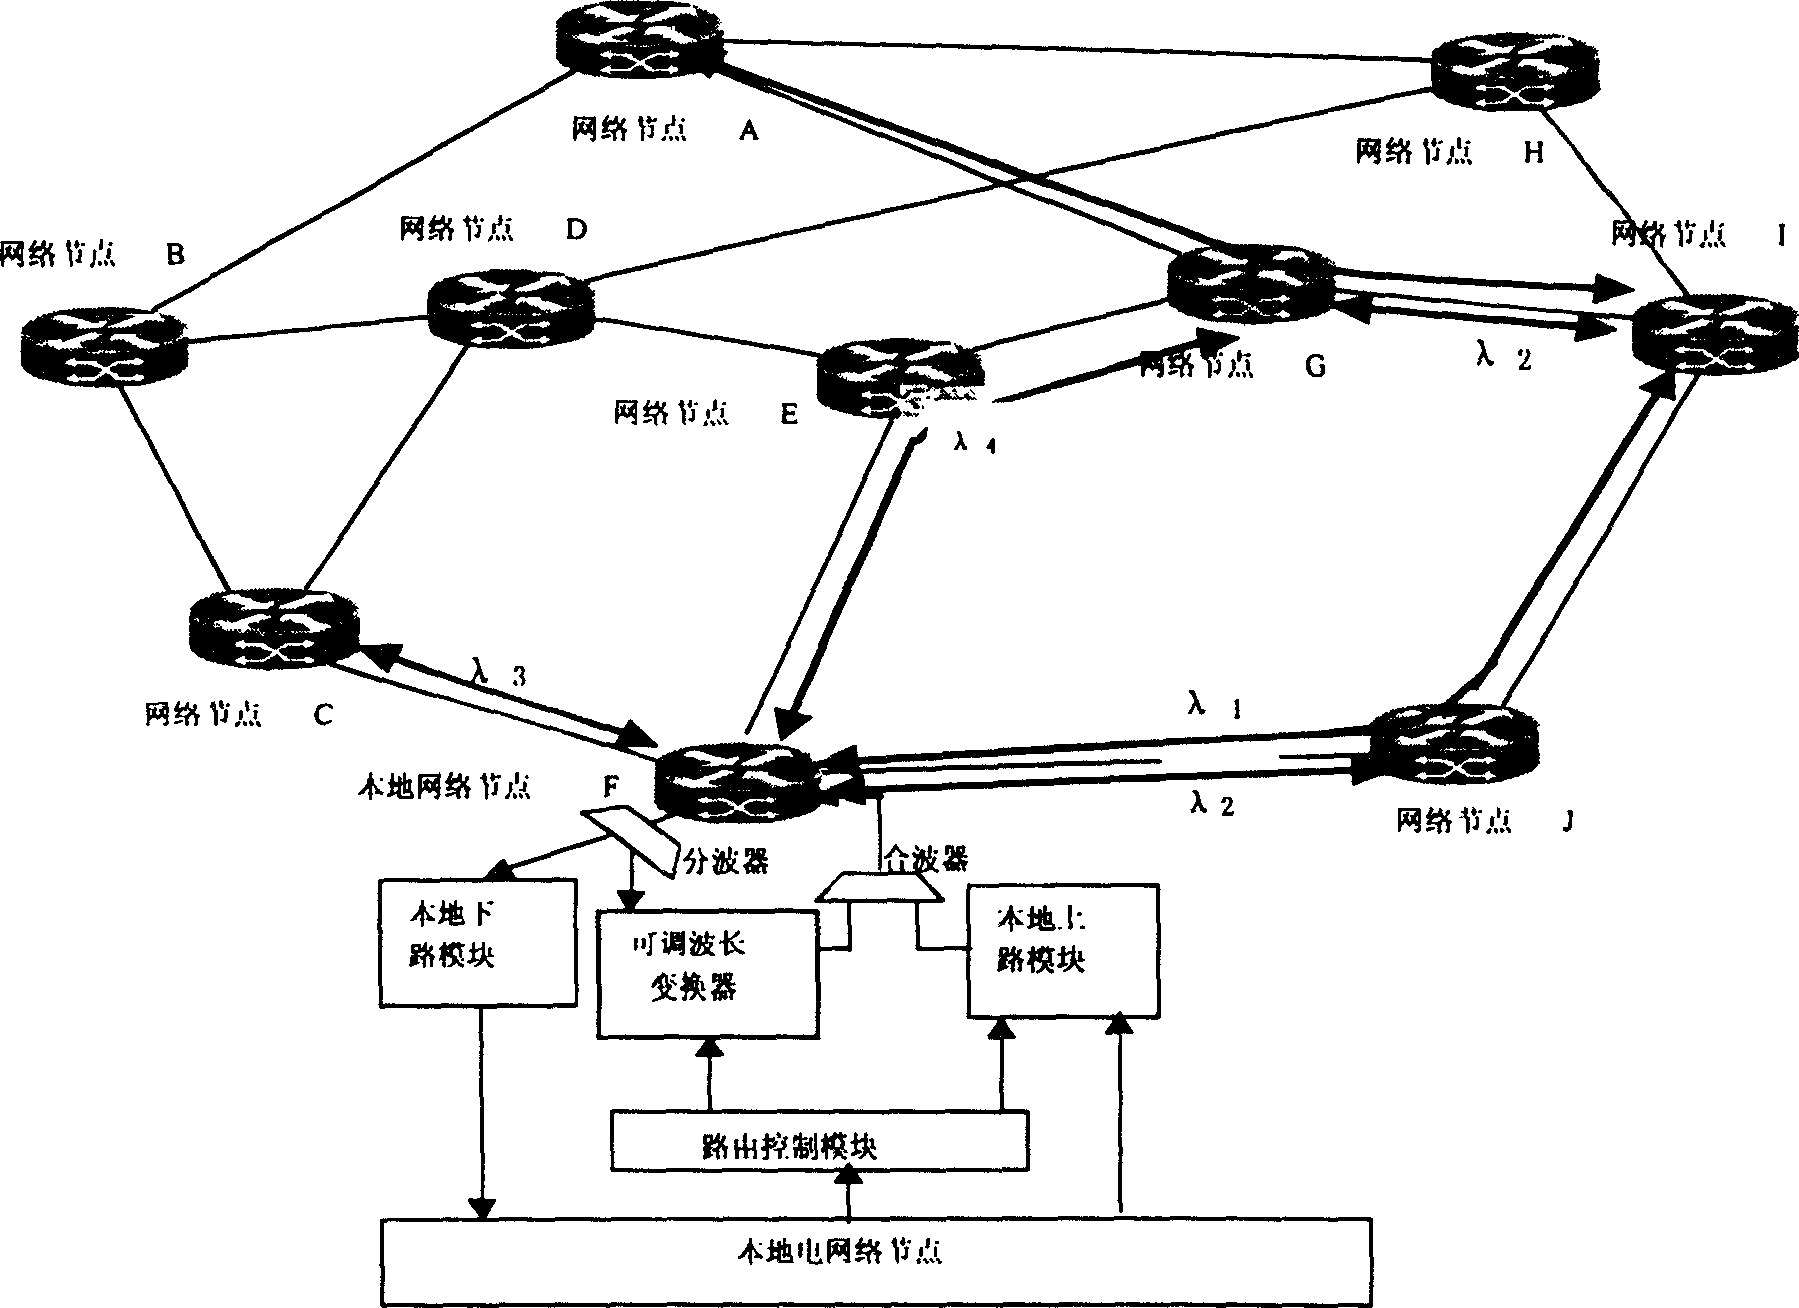 Node structure of light transmission network based on adjustable wavelength shifter and wavelength self-router